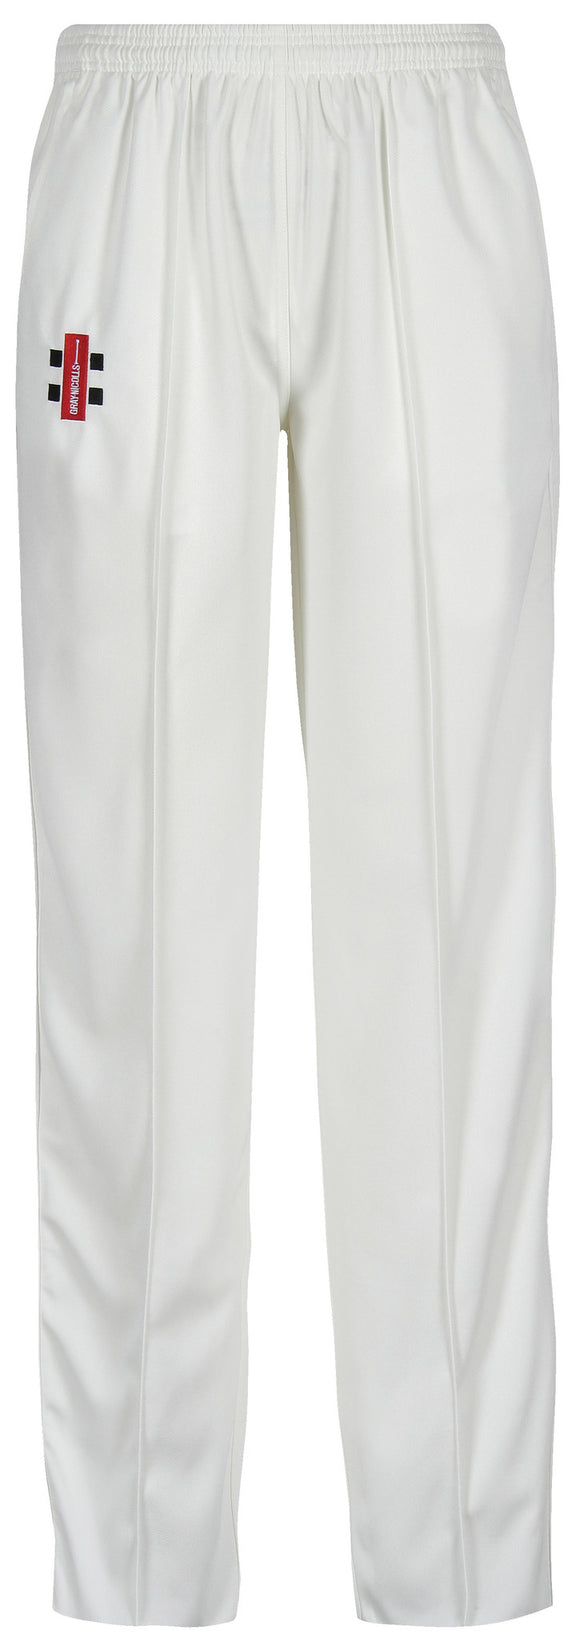 Gray-Nicolls Ladies Select Cricket Trousers